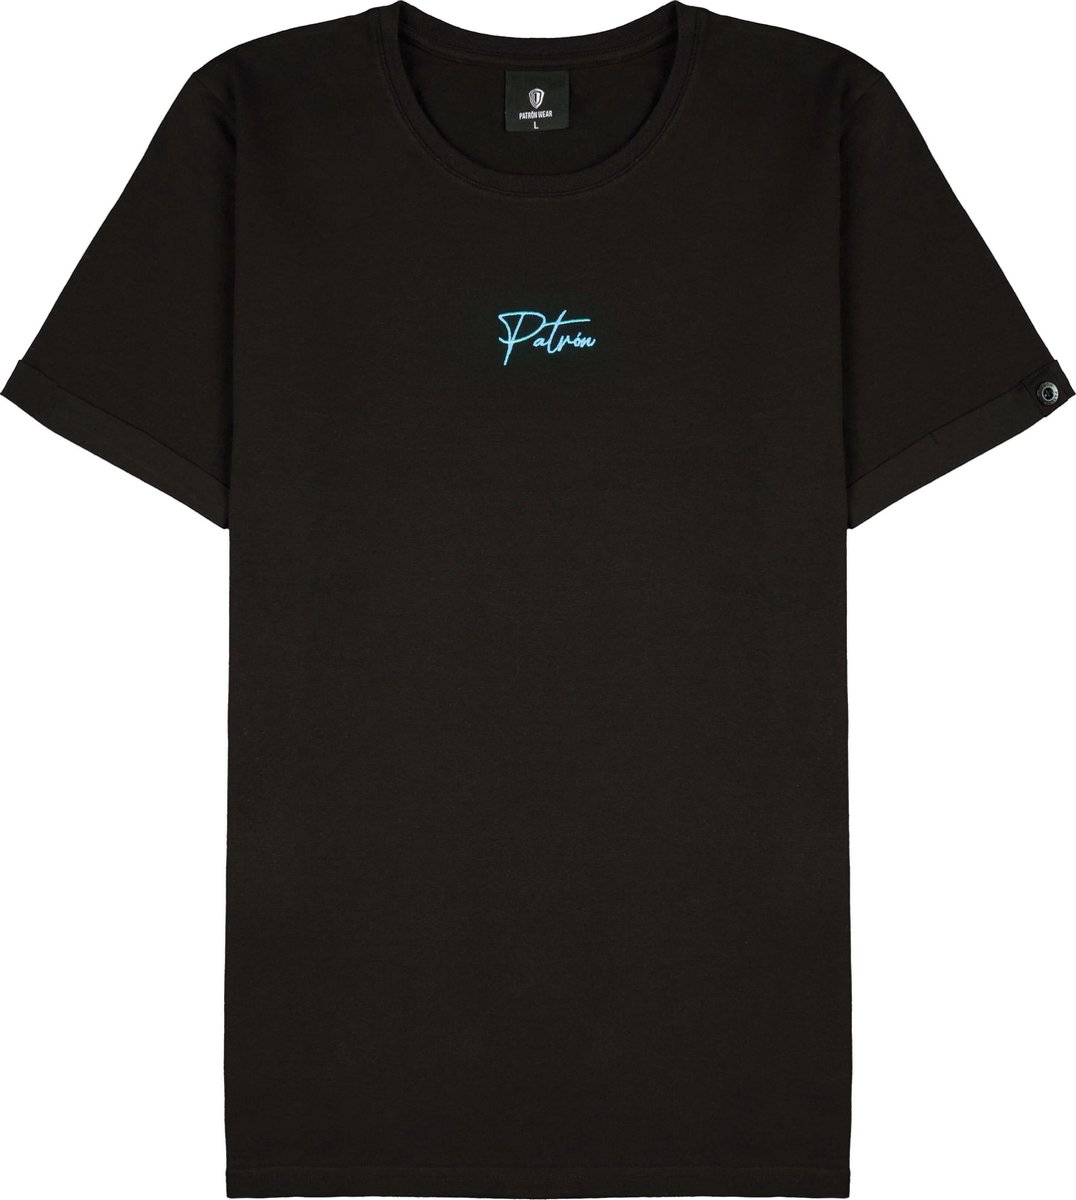 Patrón Wear - Emilio T-shirt Black/Blue - Maat XL